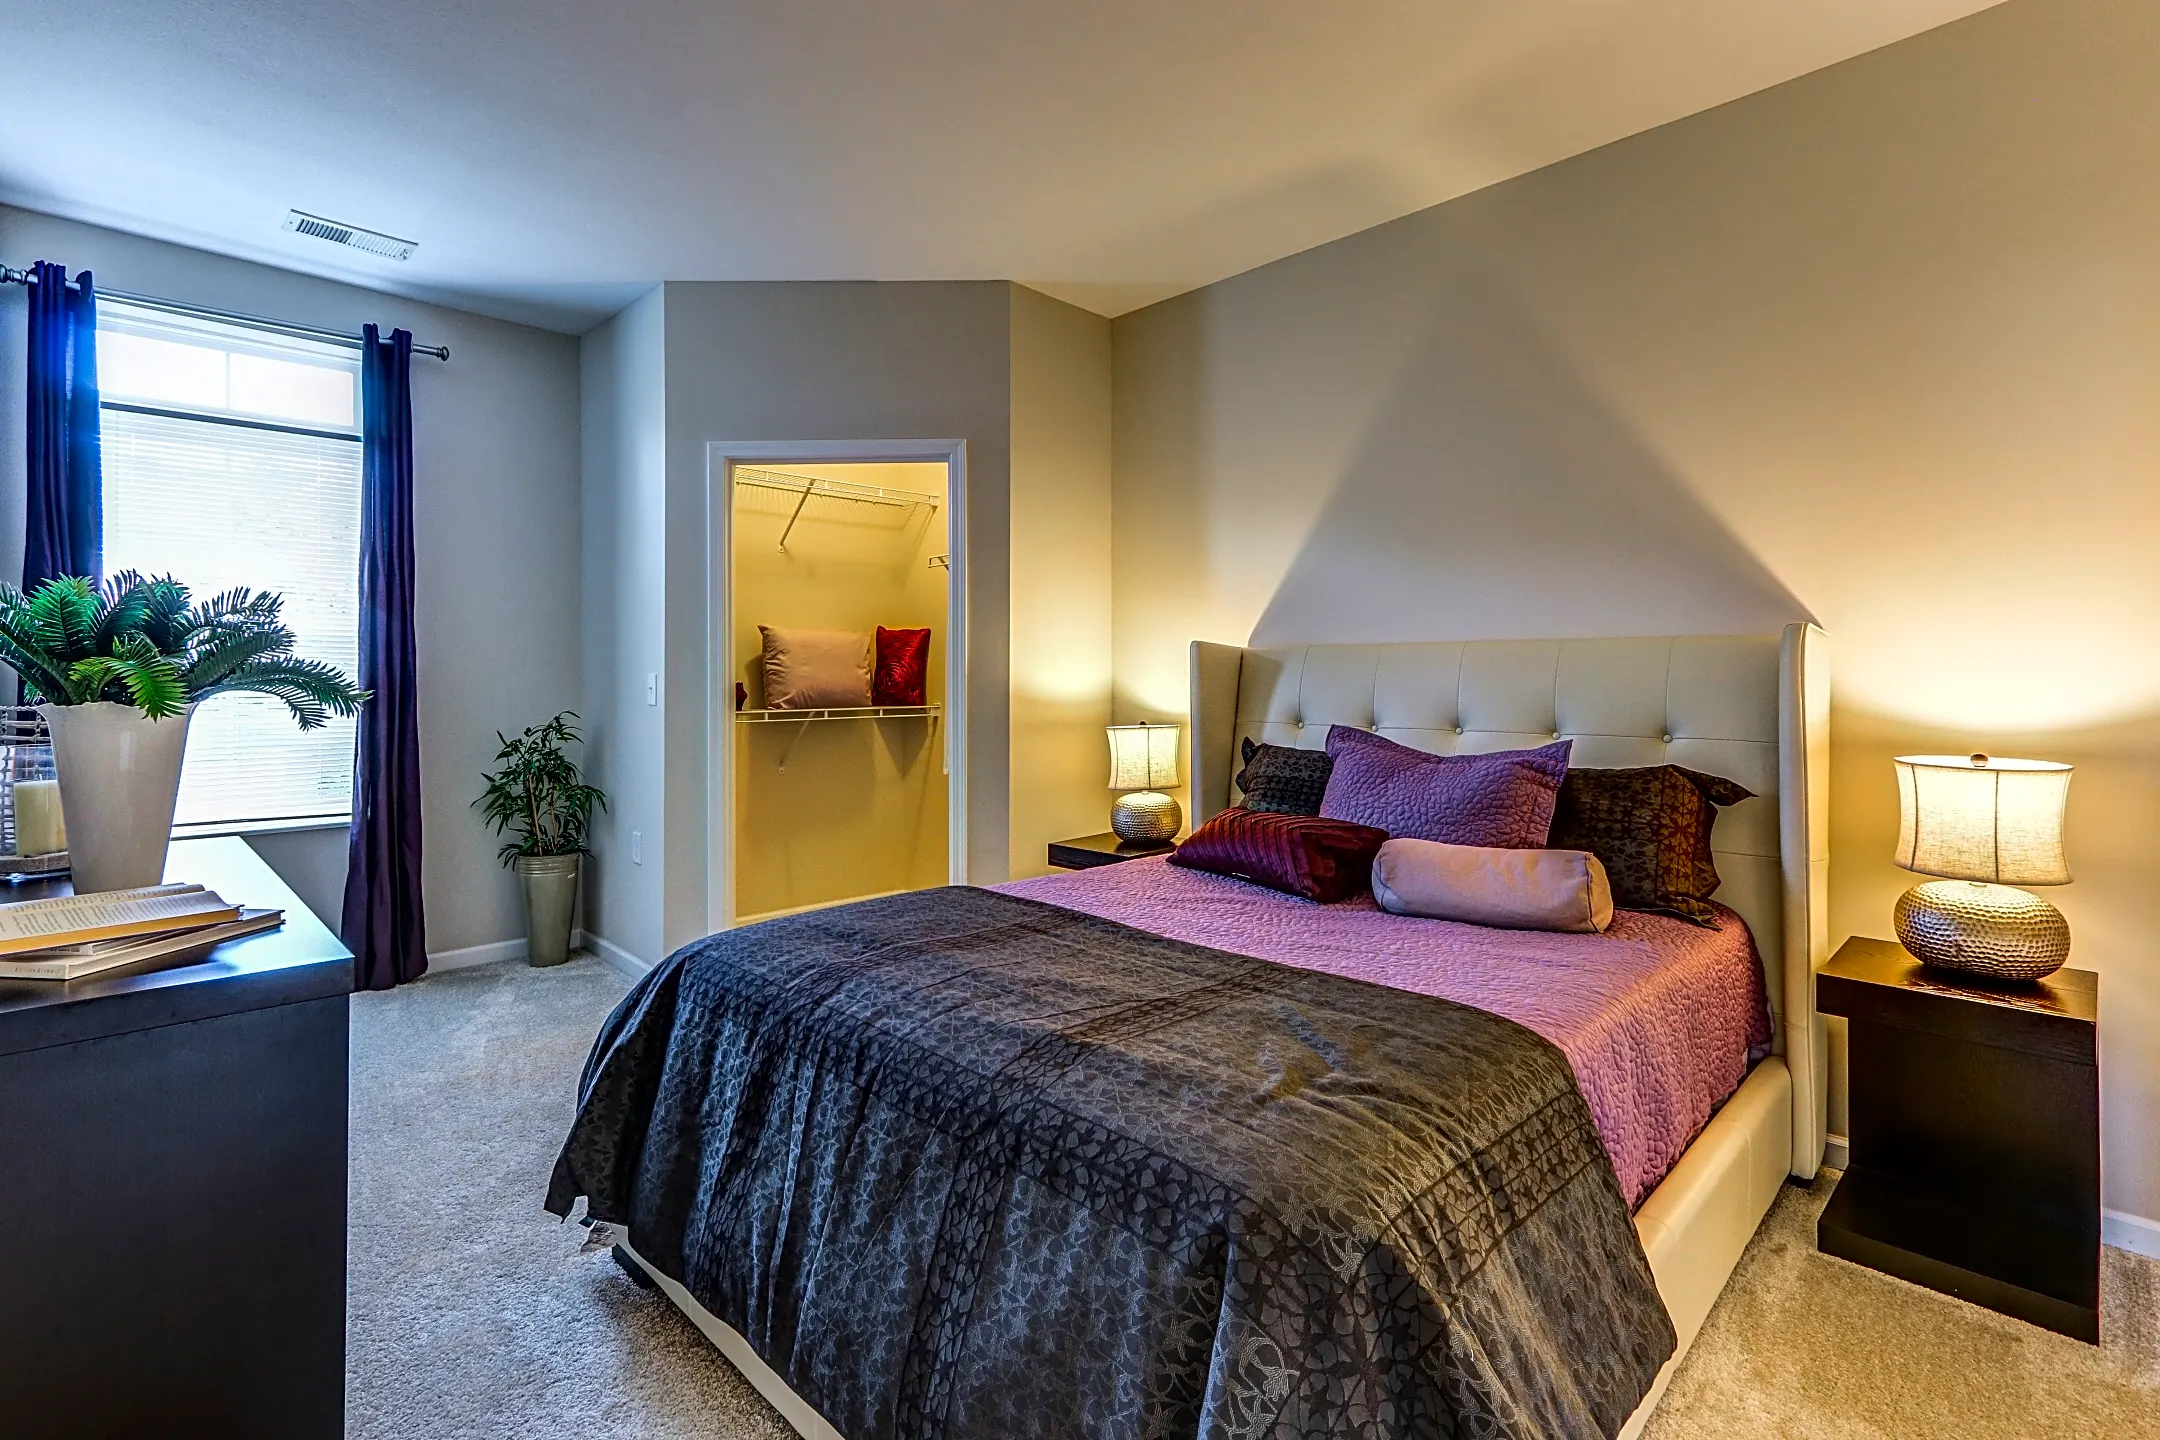 Bedroom - Arlington Park - Hilliard, OH